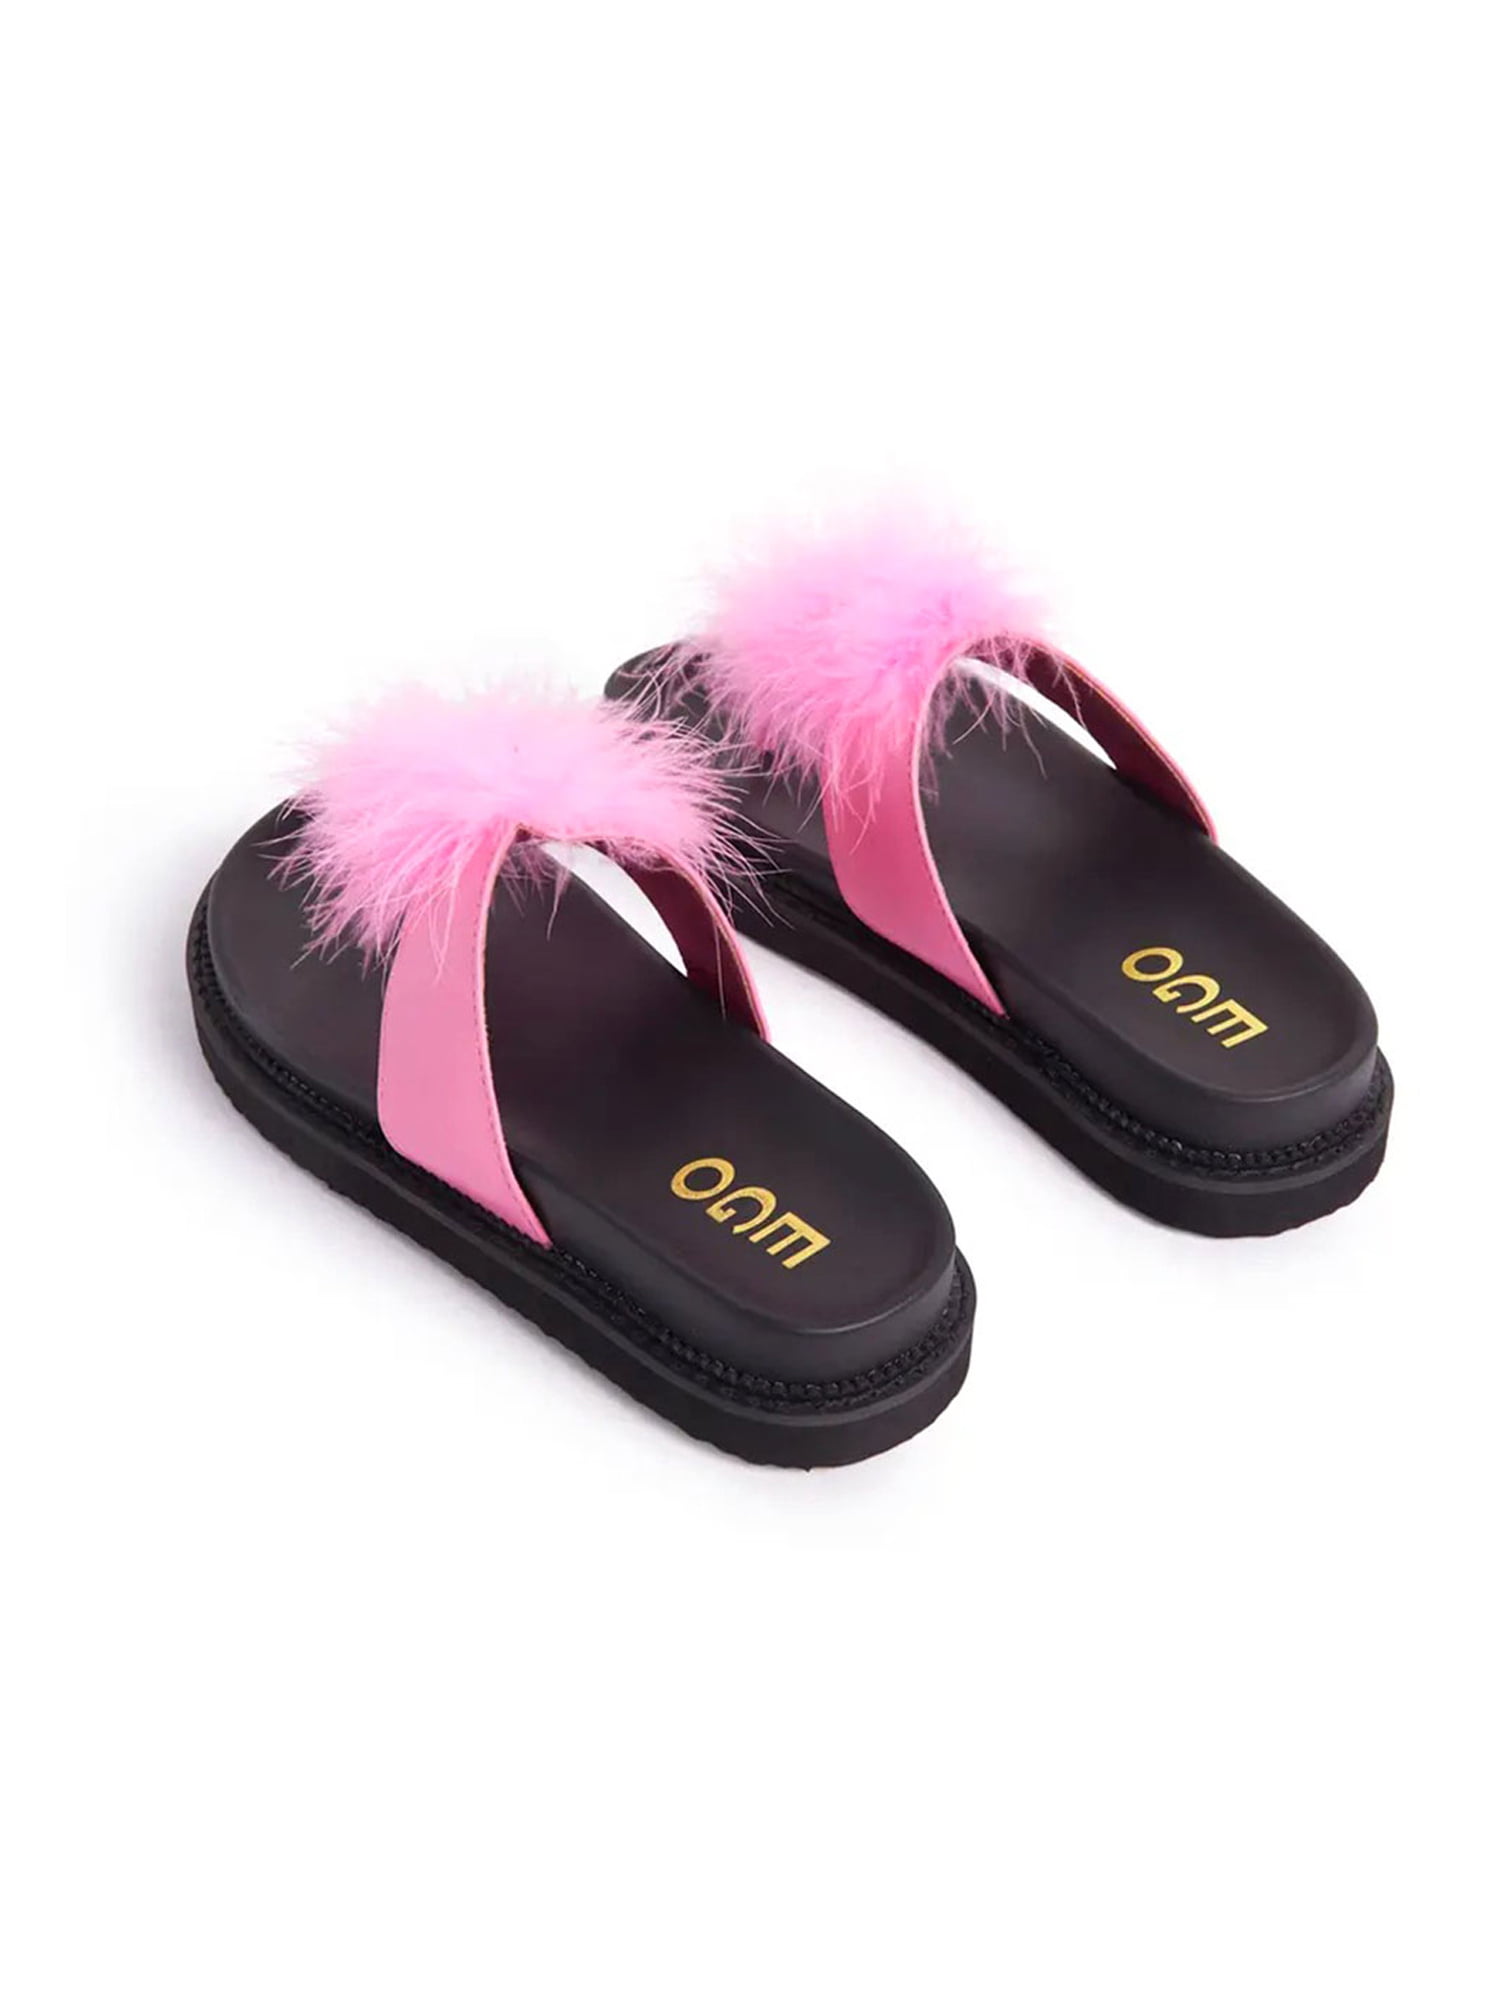 Ladies Fur Fluffy Sliders Slippers Slip On Flips Flops Flat Sandals Shoes 